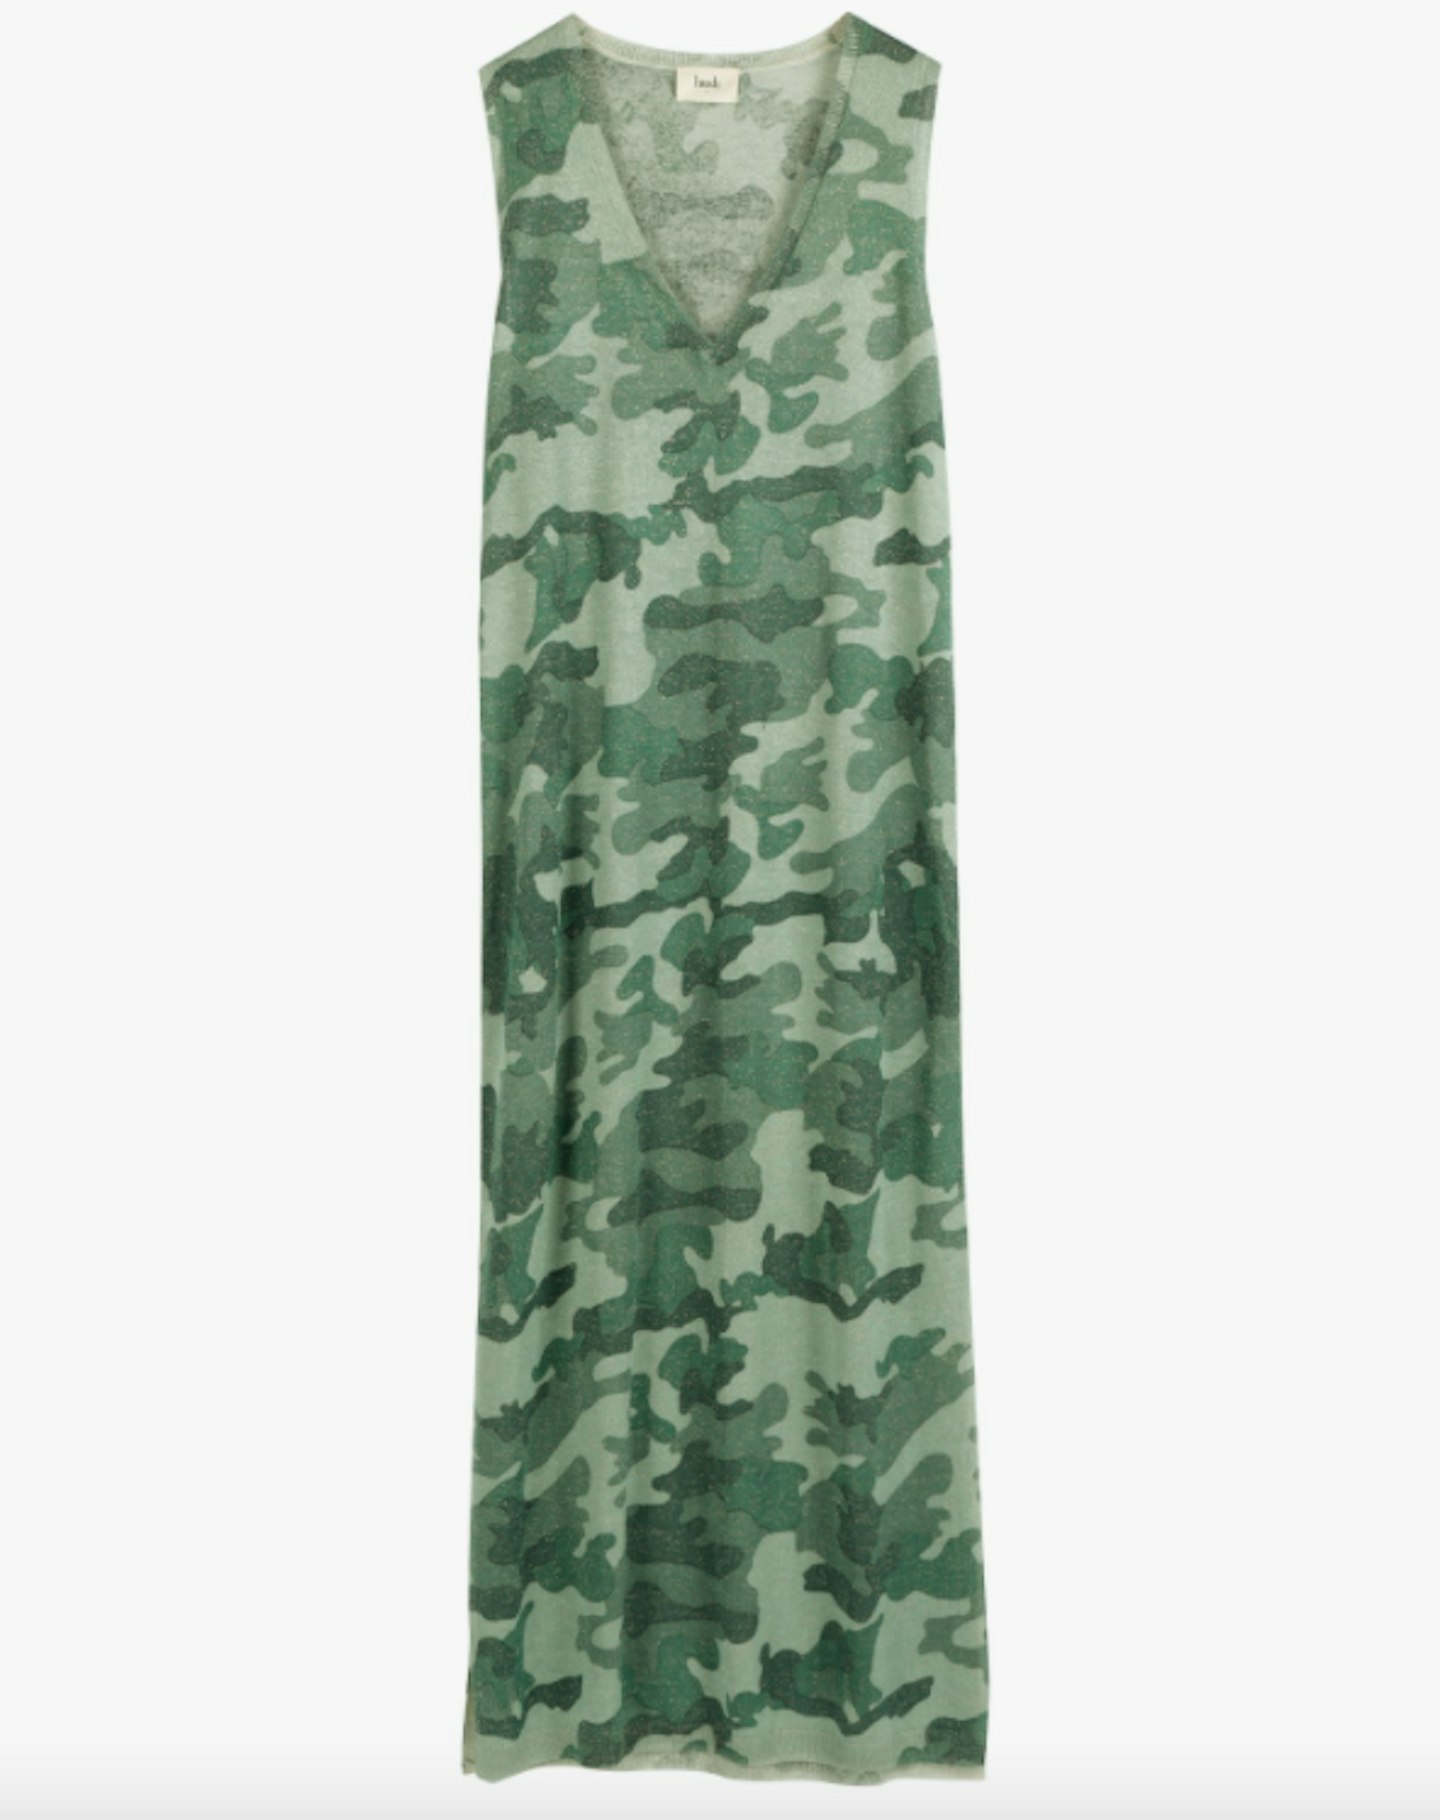 Hush, Leona Metallic Knit Dress, £79